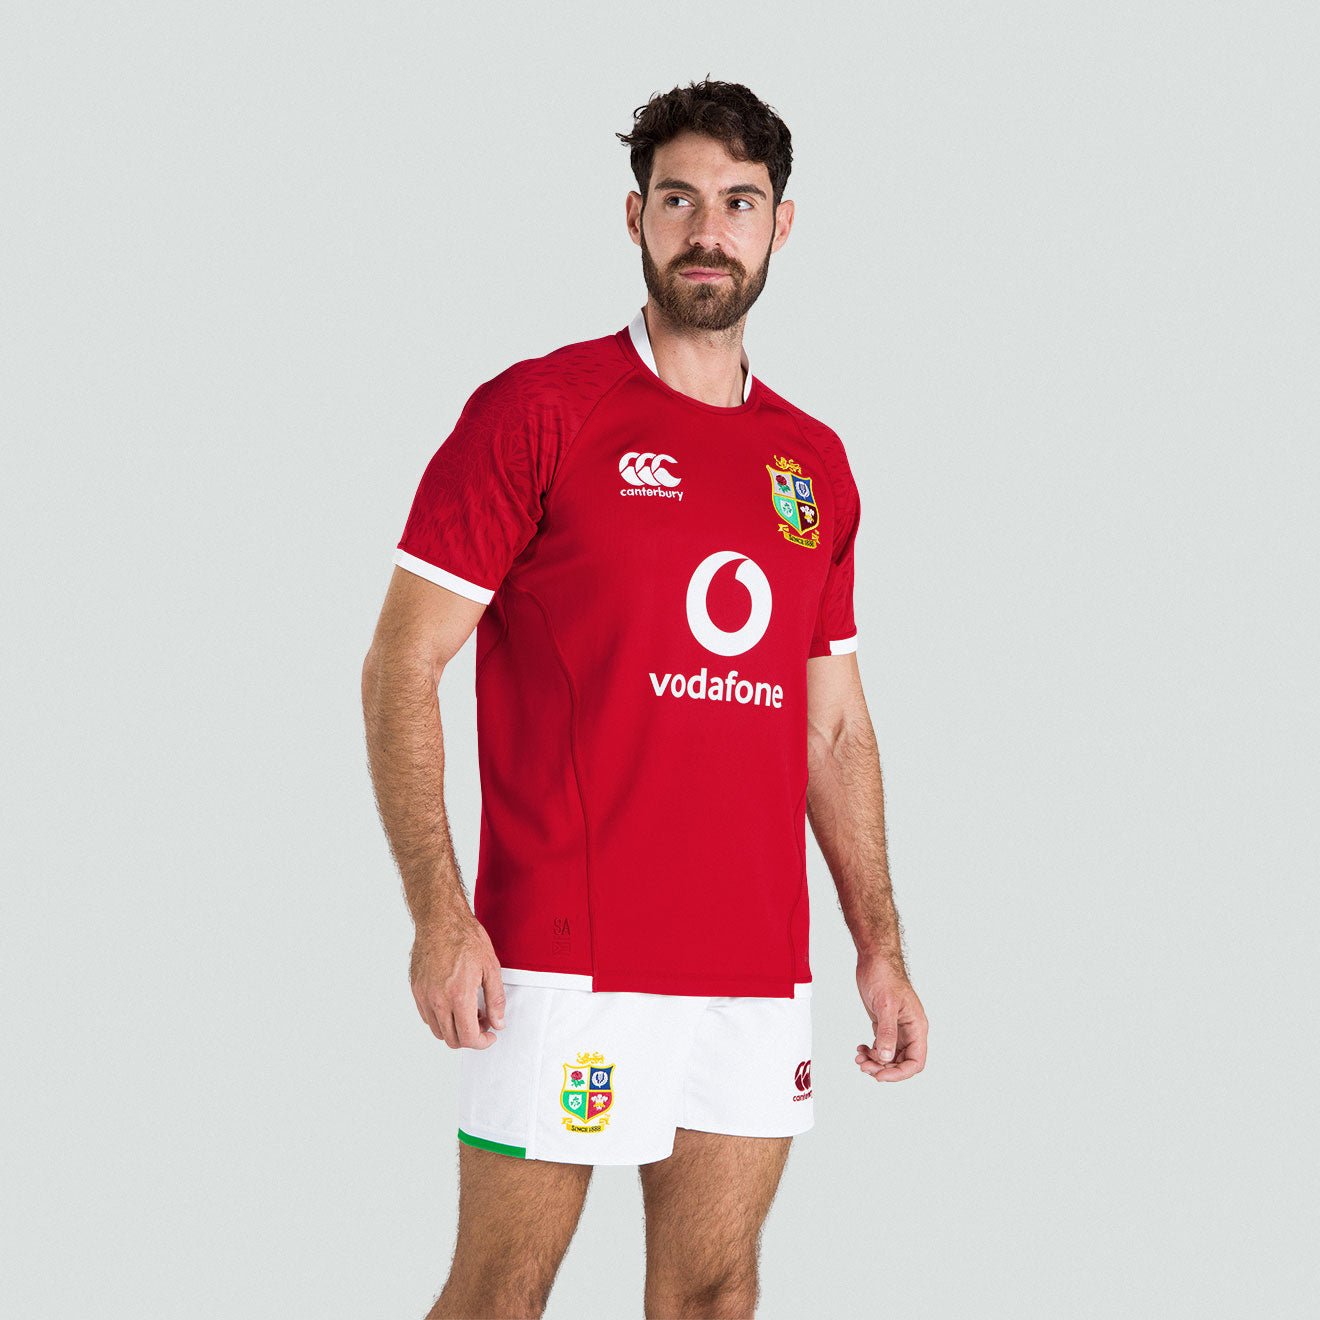 british lions rugby shirt 2019